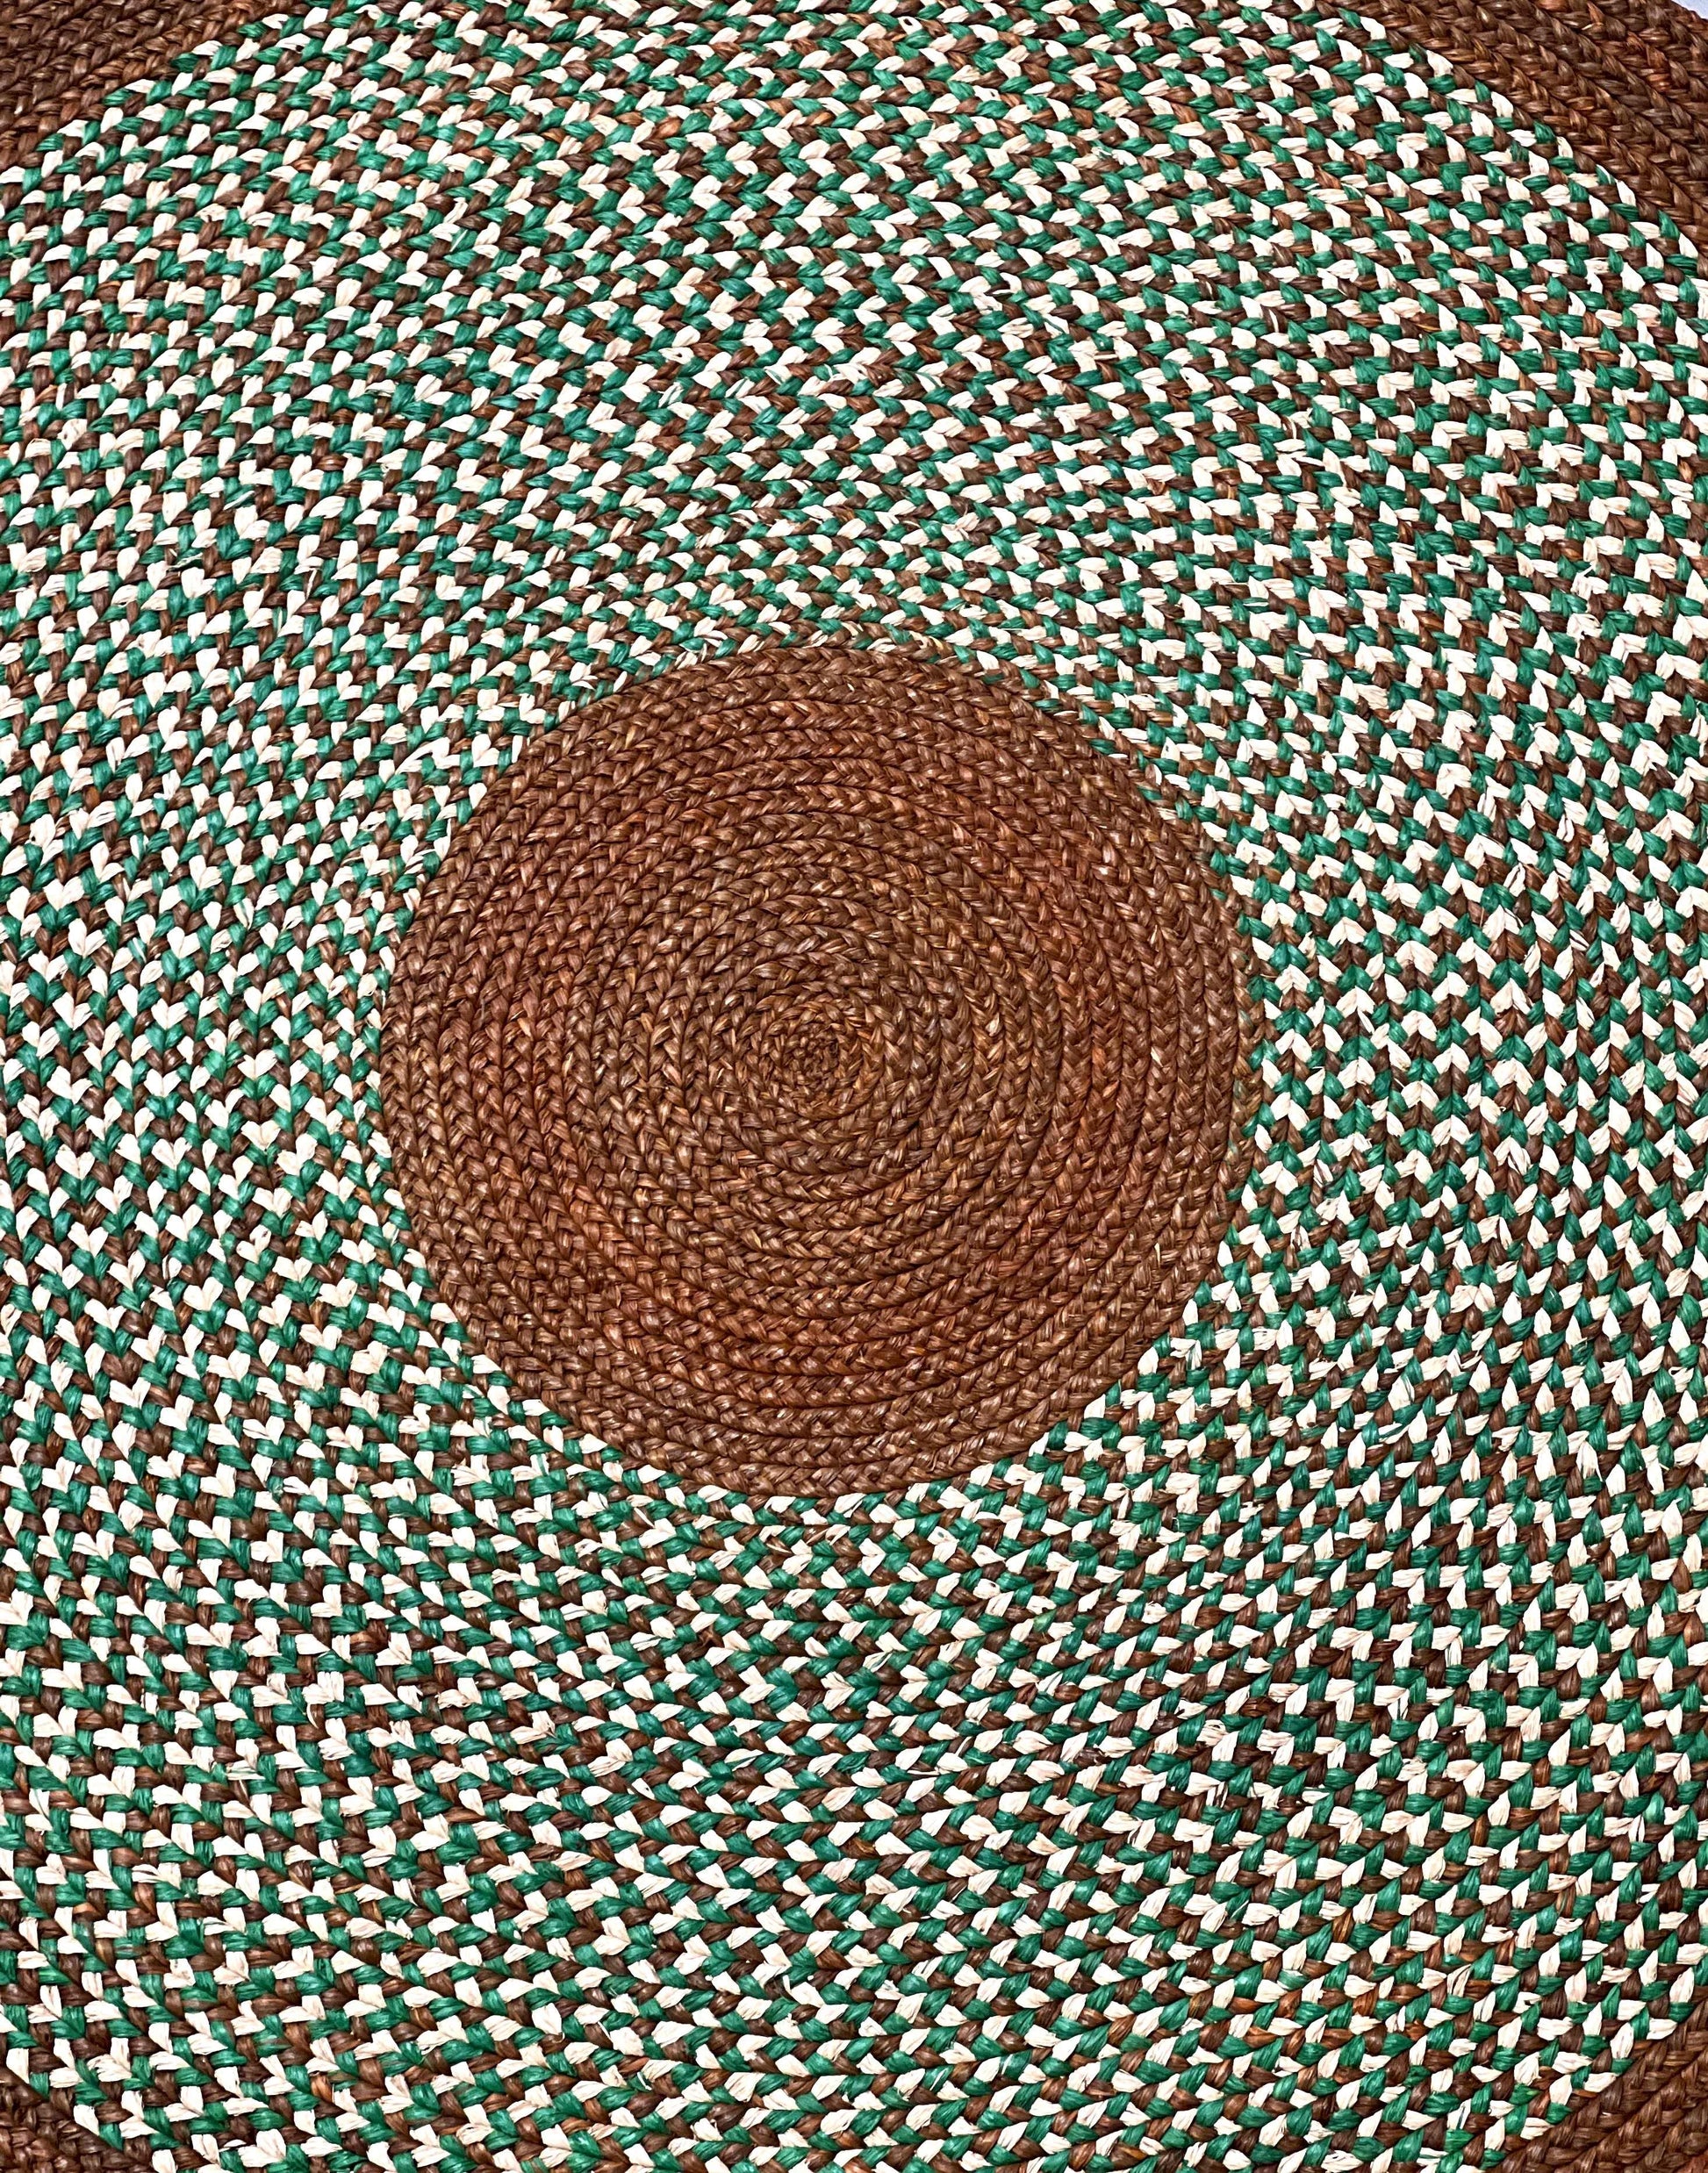 Tapis rond en raphia naturel, vert & marron- Jocelyne- 150cm Intimani Ethnique chic